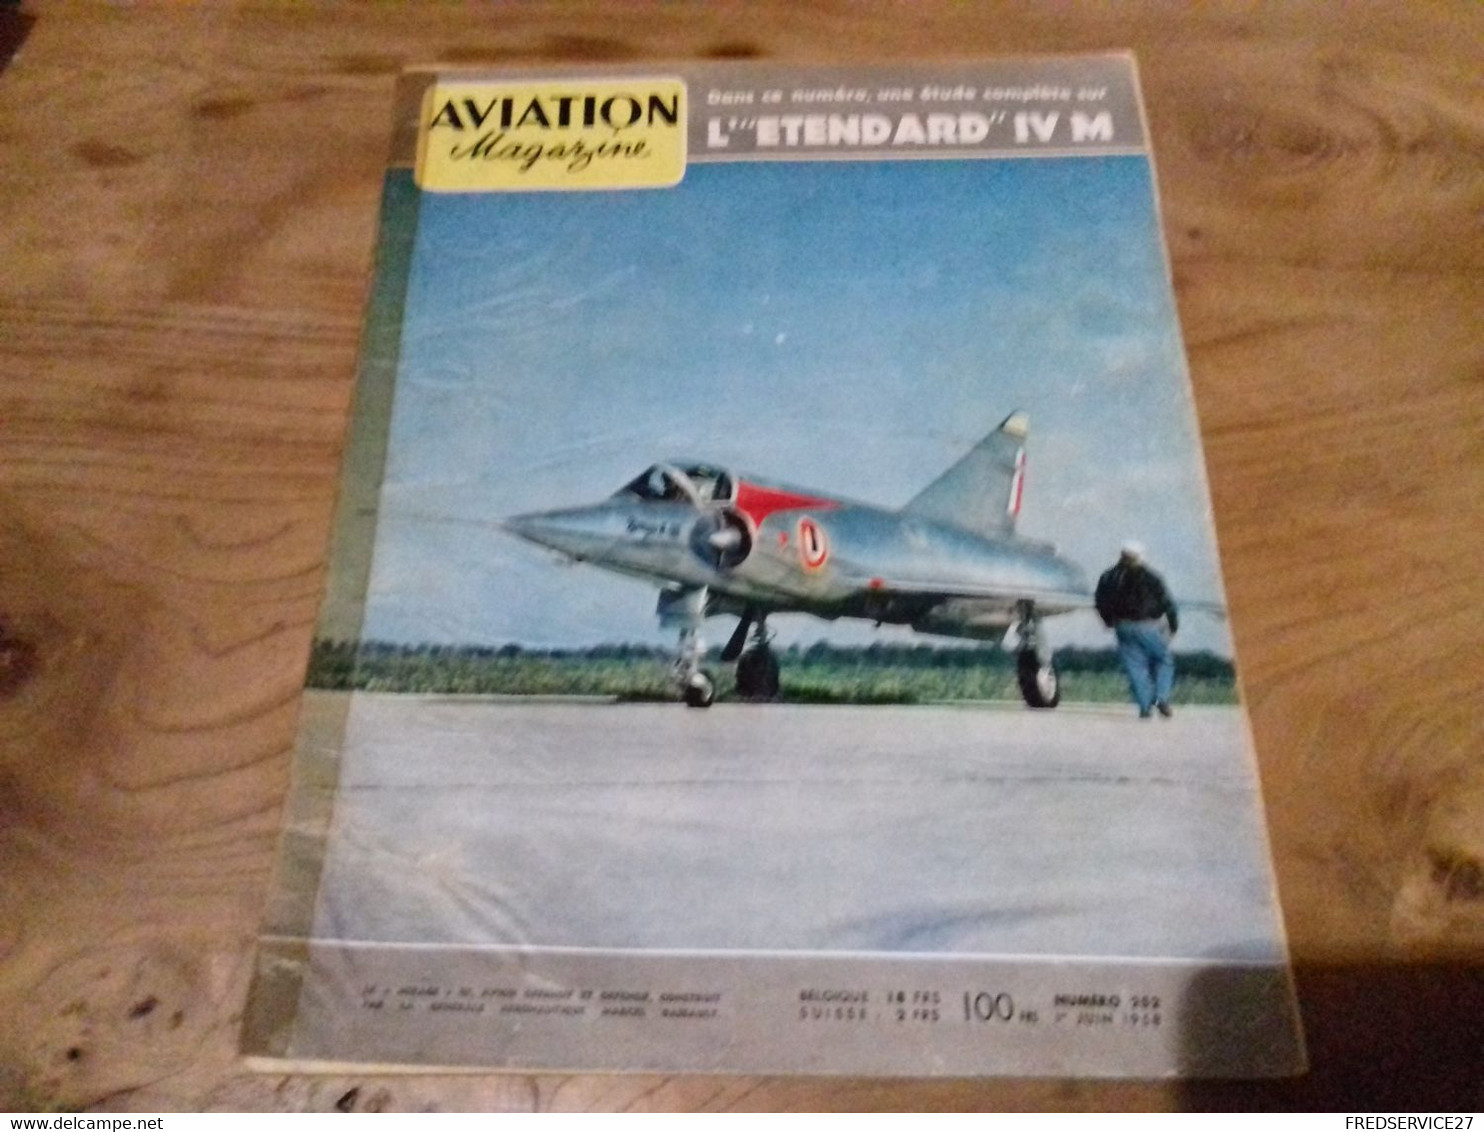 40/ AVIATION MAGAZINE N° 252 1958 L ETANDARD IV M /LE MIRAGE ?/ ECT - Aviation